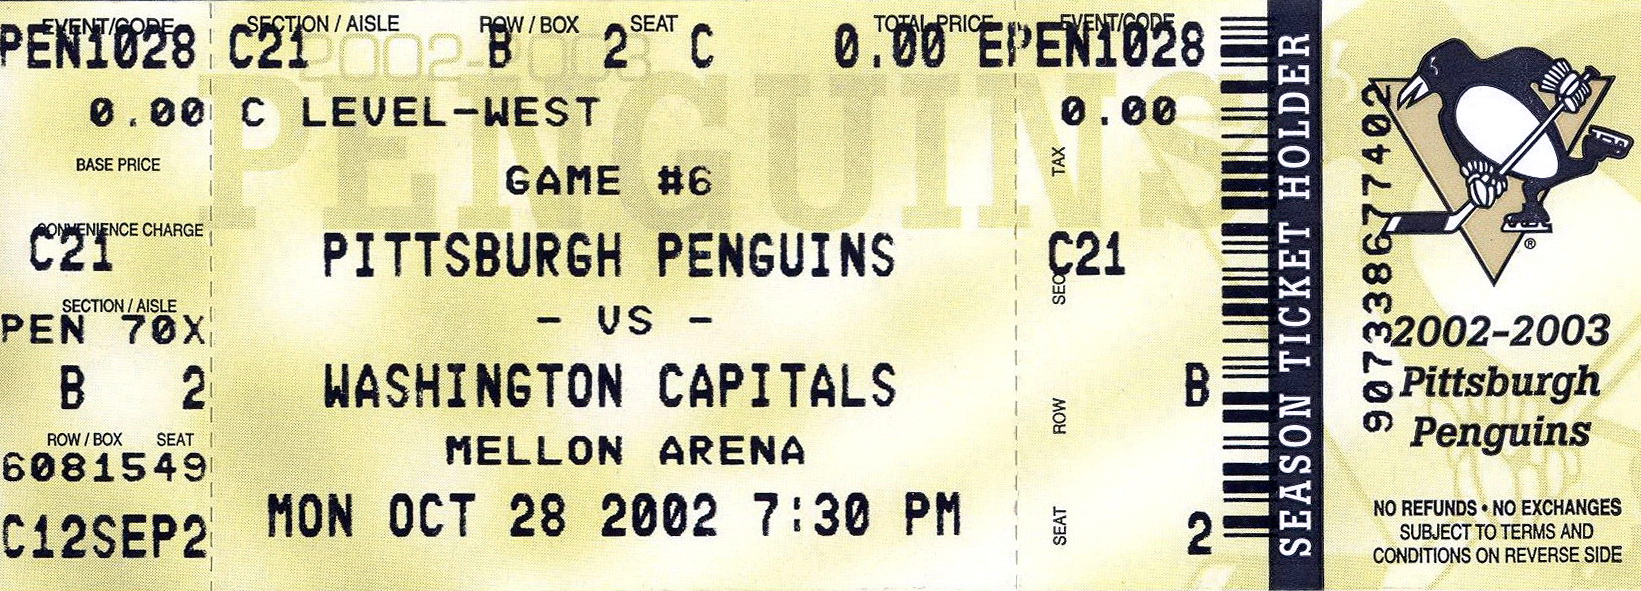 Penguins Tickets 